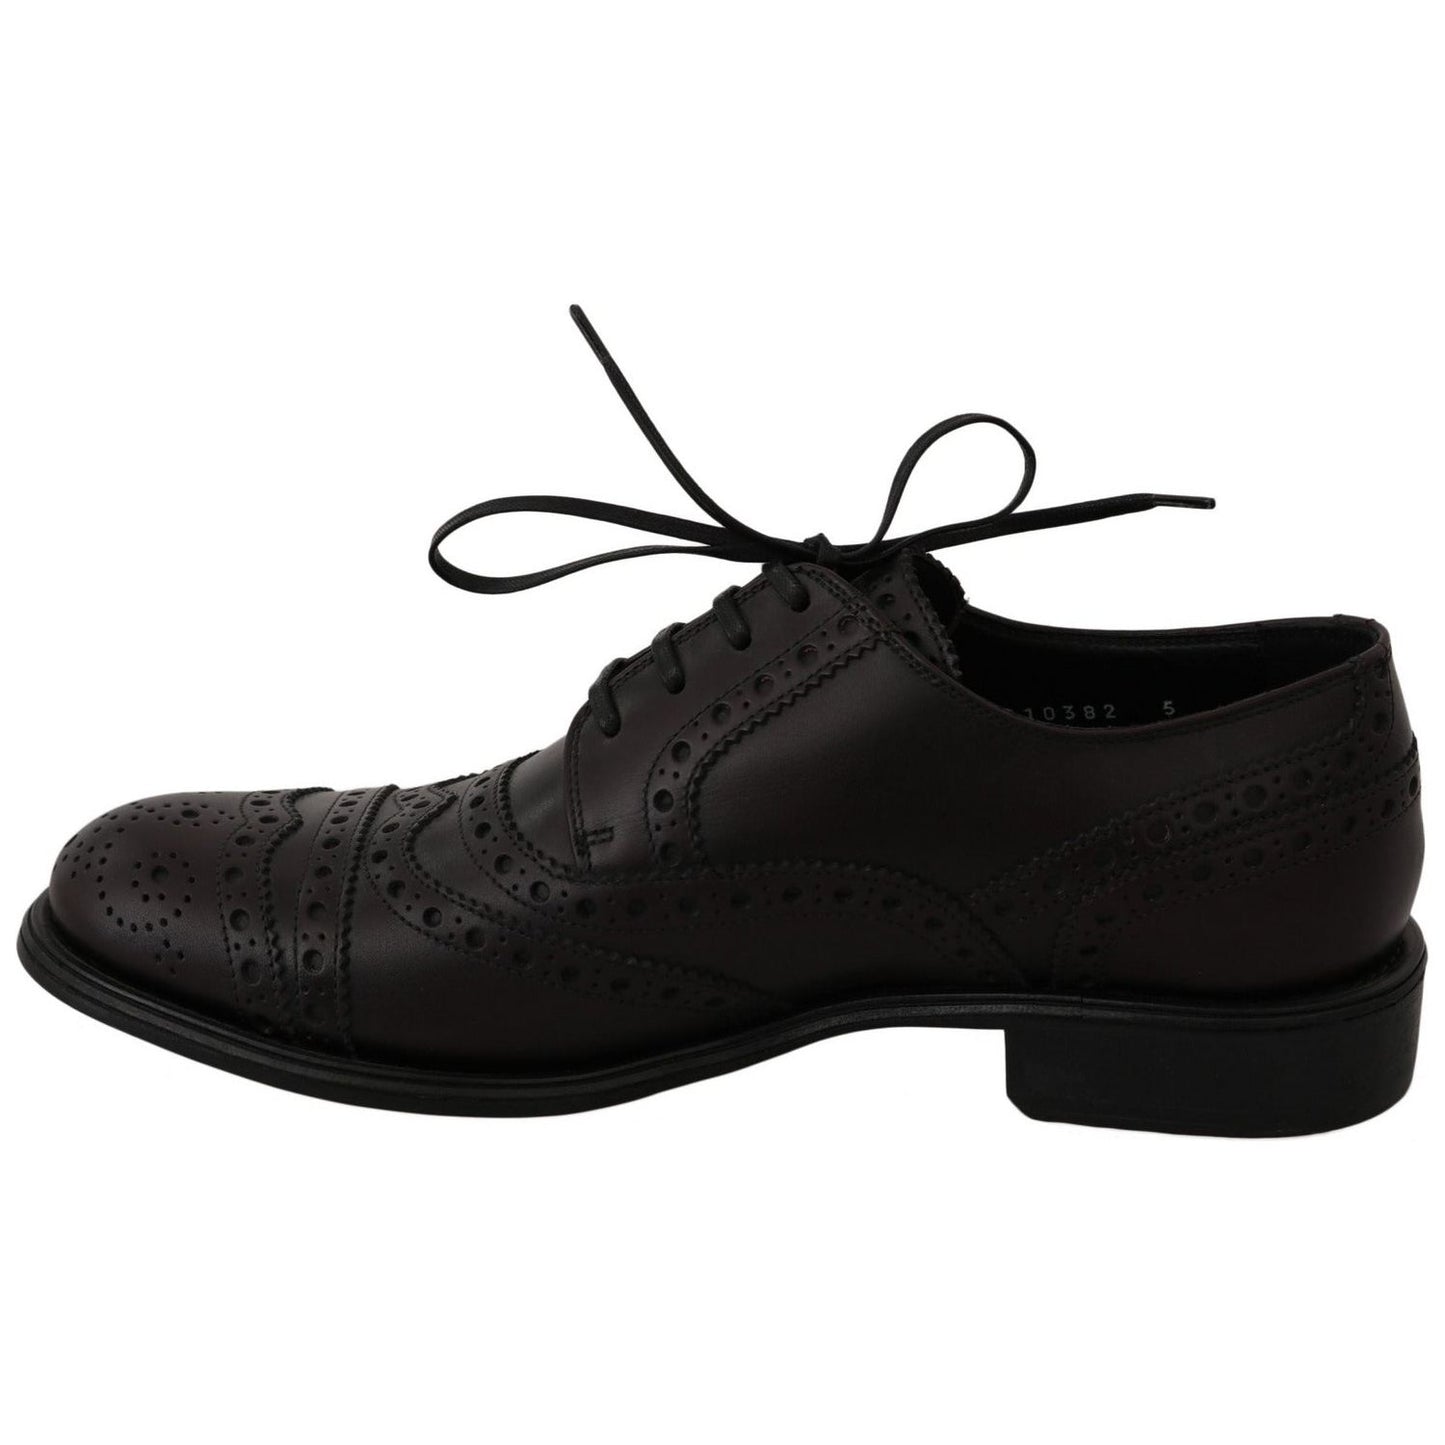 Dolce & Gabbana Elegant Bordeaux Wingtip Derby Dress Shoes Dress Shoes black-leather-wingtip-oxford-dress-shoes-1 IMG_8973-scaled_47499f16-0906-4980-ab1f-15b1cac6458c.jpg